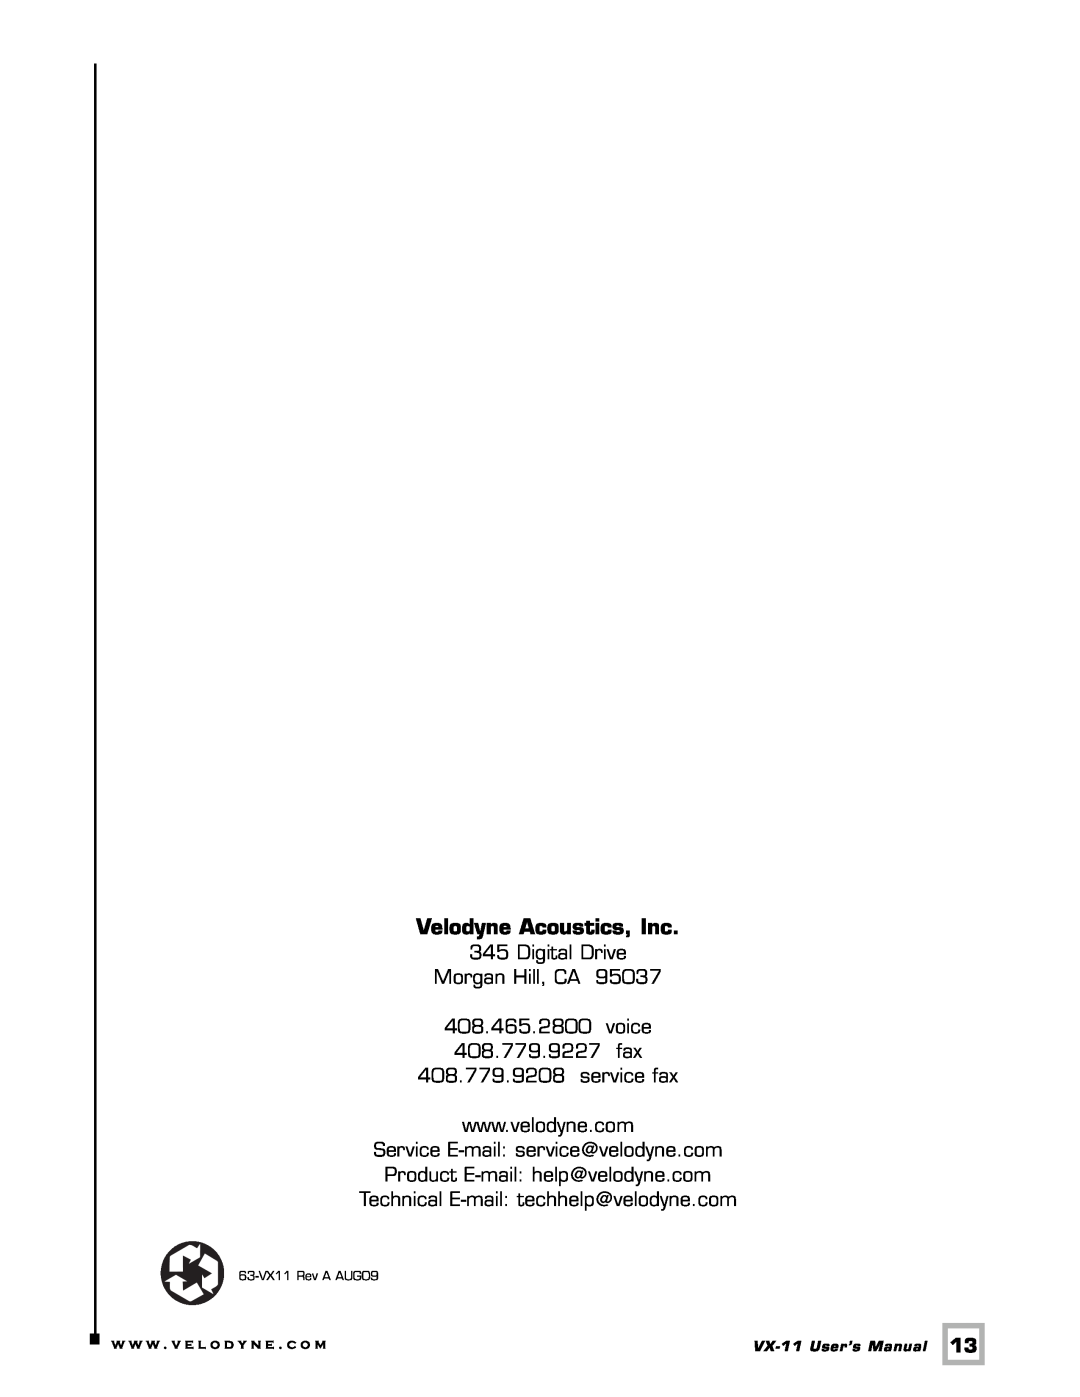 Velodyne Acoustics user manual Velodyne Acoustics, Inc, Digital Drive Morgan Hill, CA, VX-11User’s Manual 